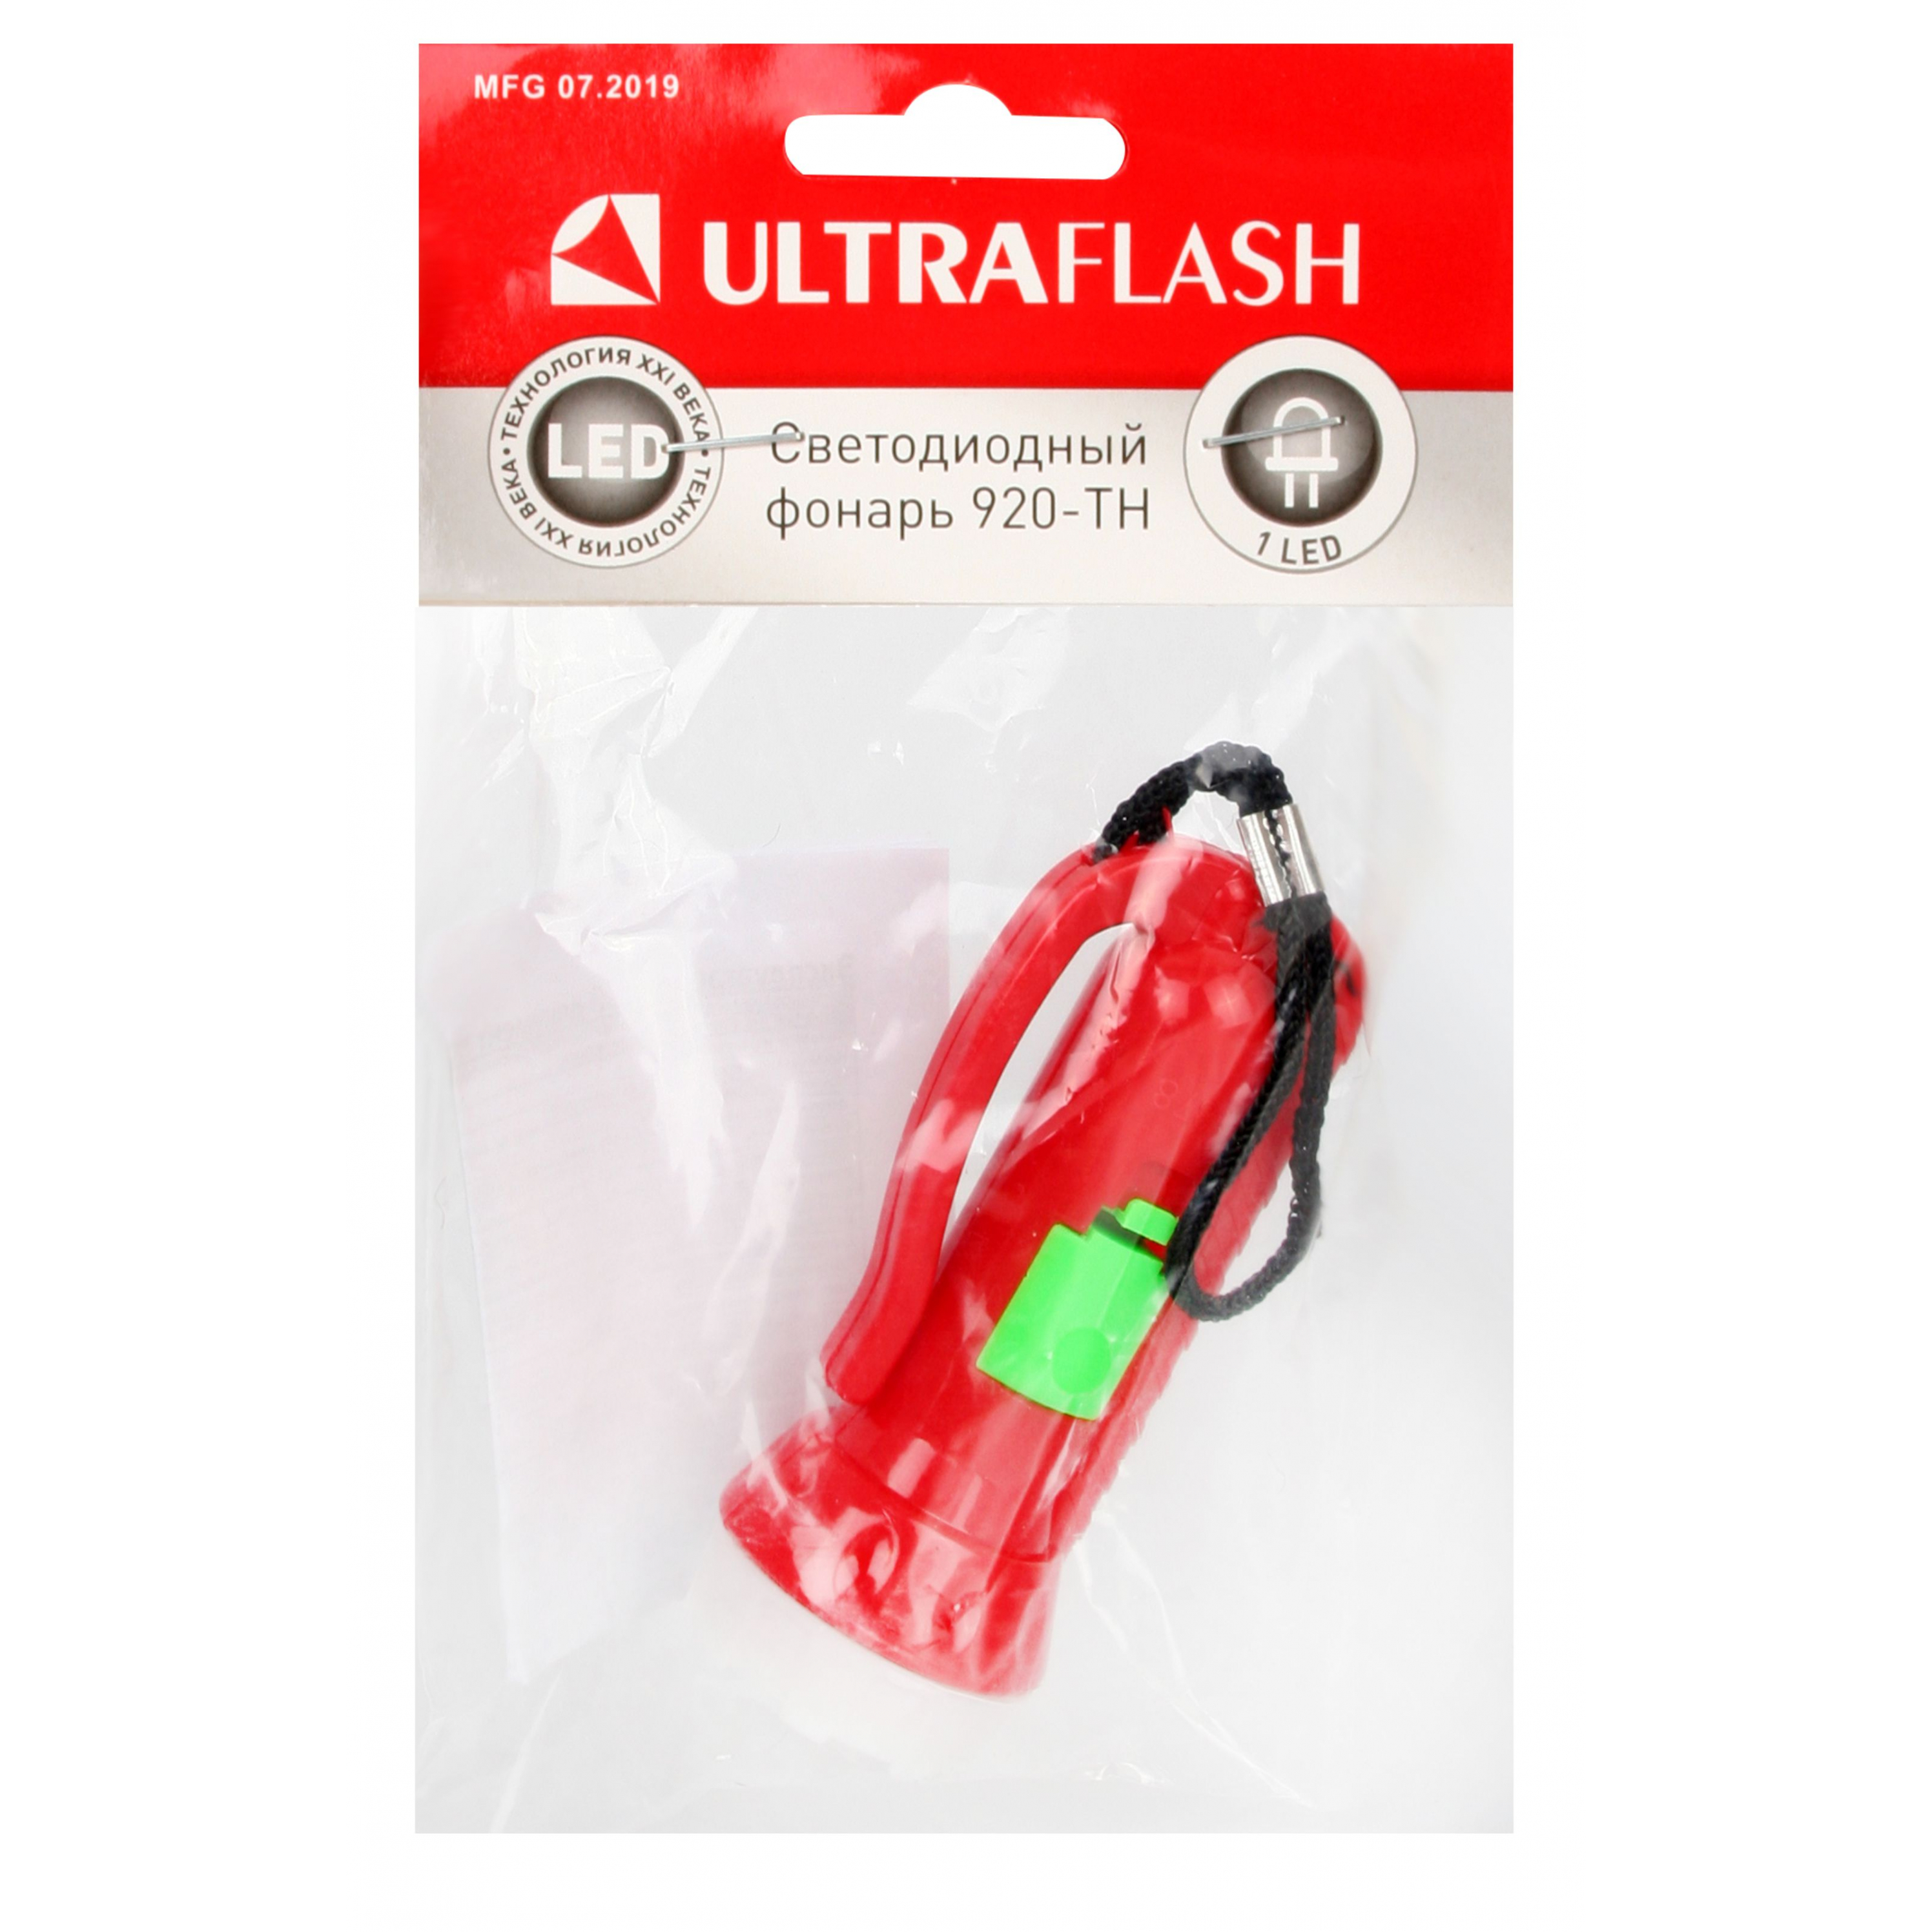 Ultraflash 920-TH (фонарь, красный, 1LED, линза, 1 реж, 3xAG3 в компл., пласт., блист - пакет)